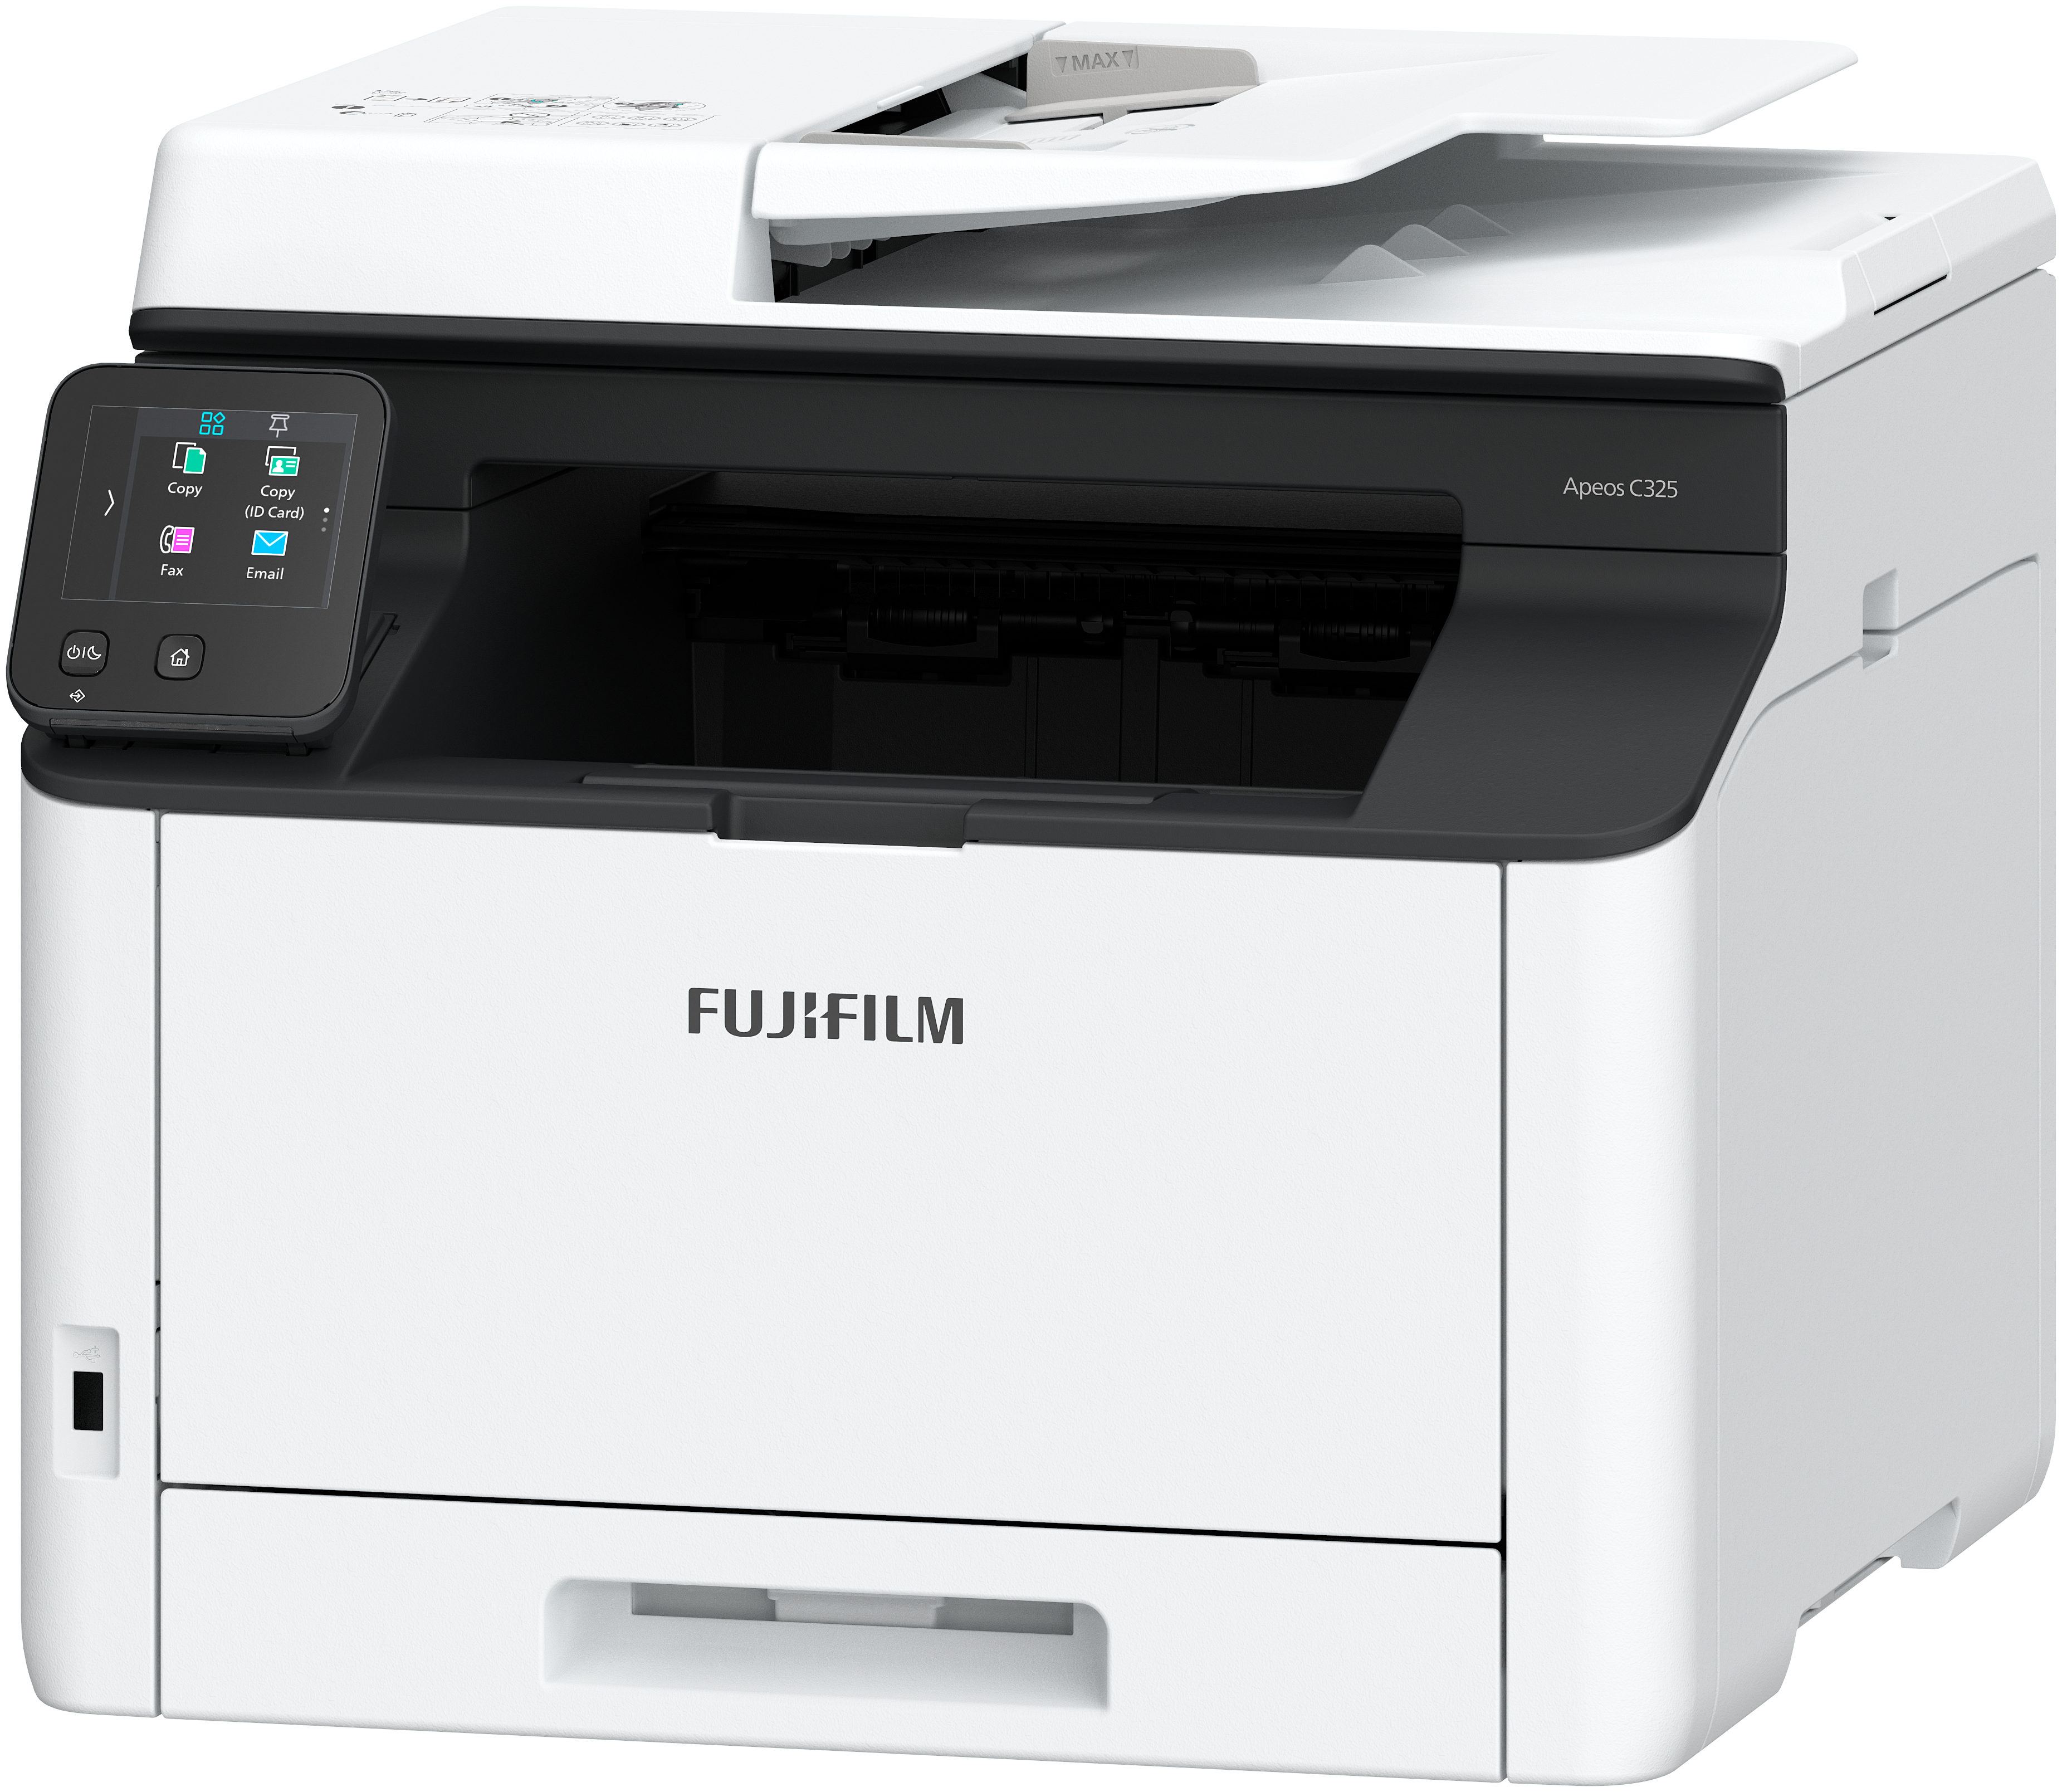 CP505 Printer